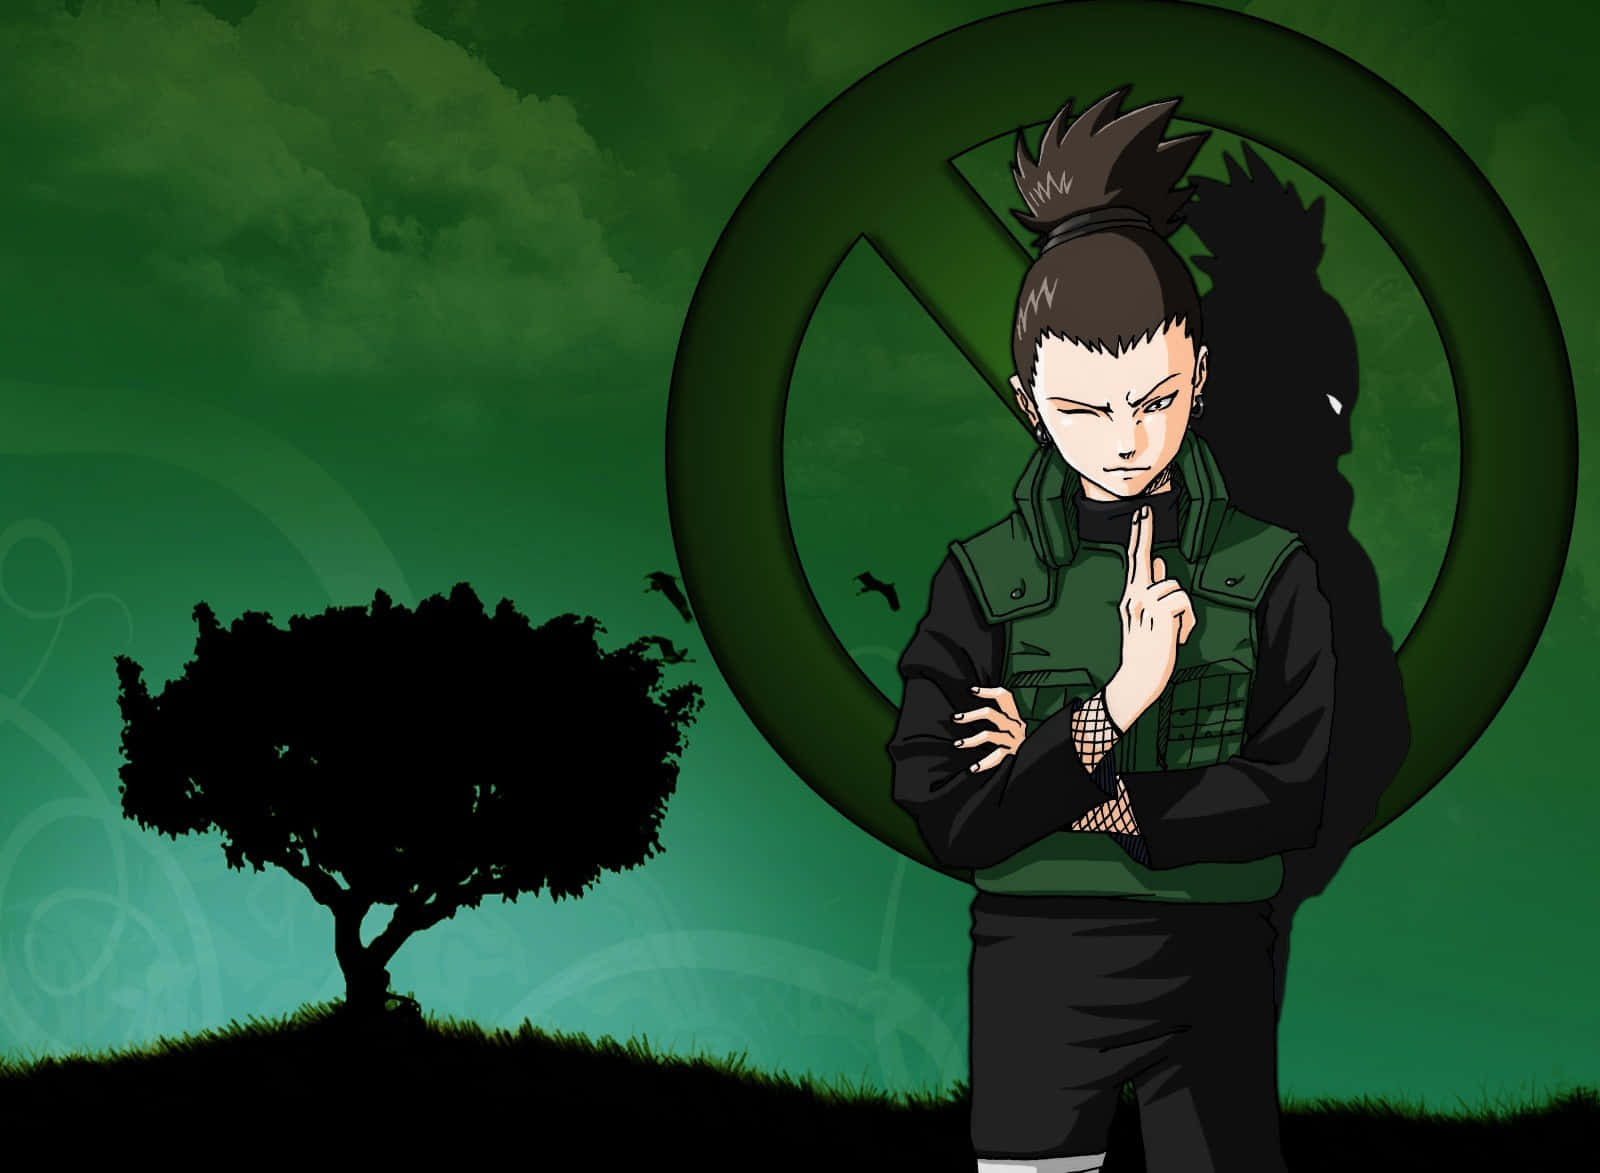 Narutobakgrundsbilder - Naruto Bakgrundsbilder Wallpaper